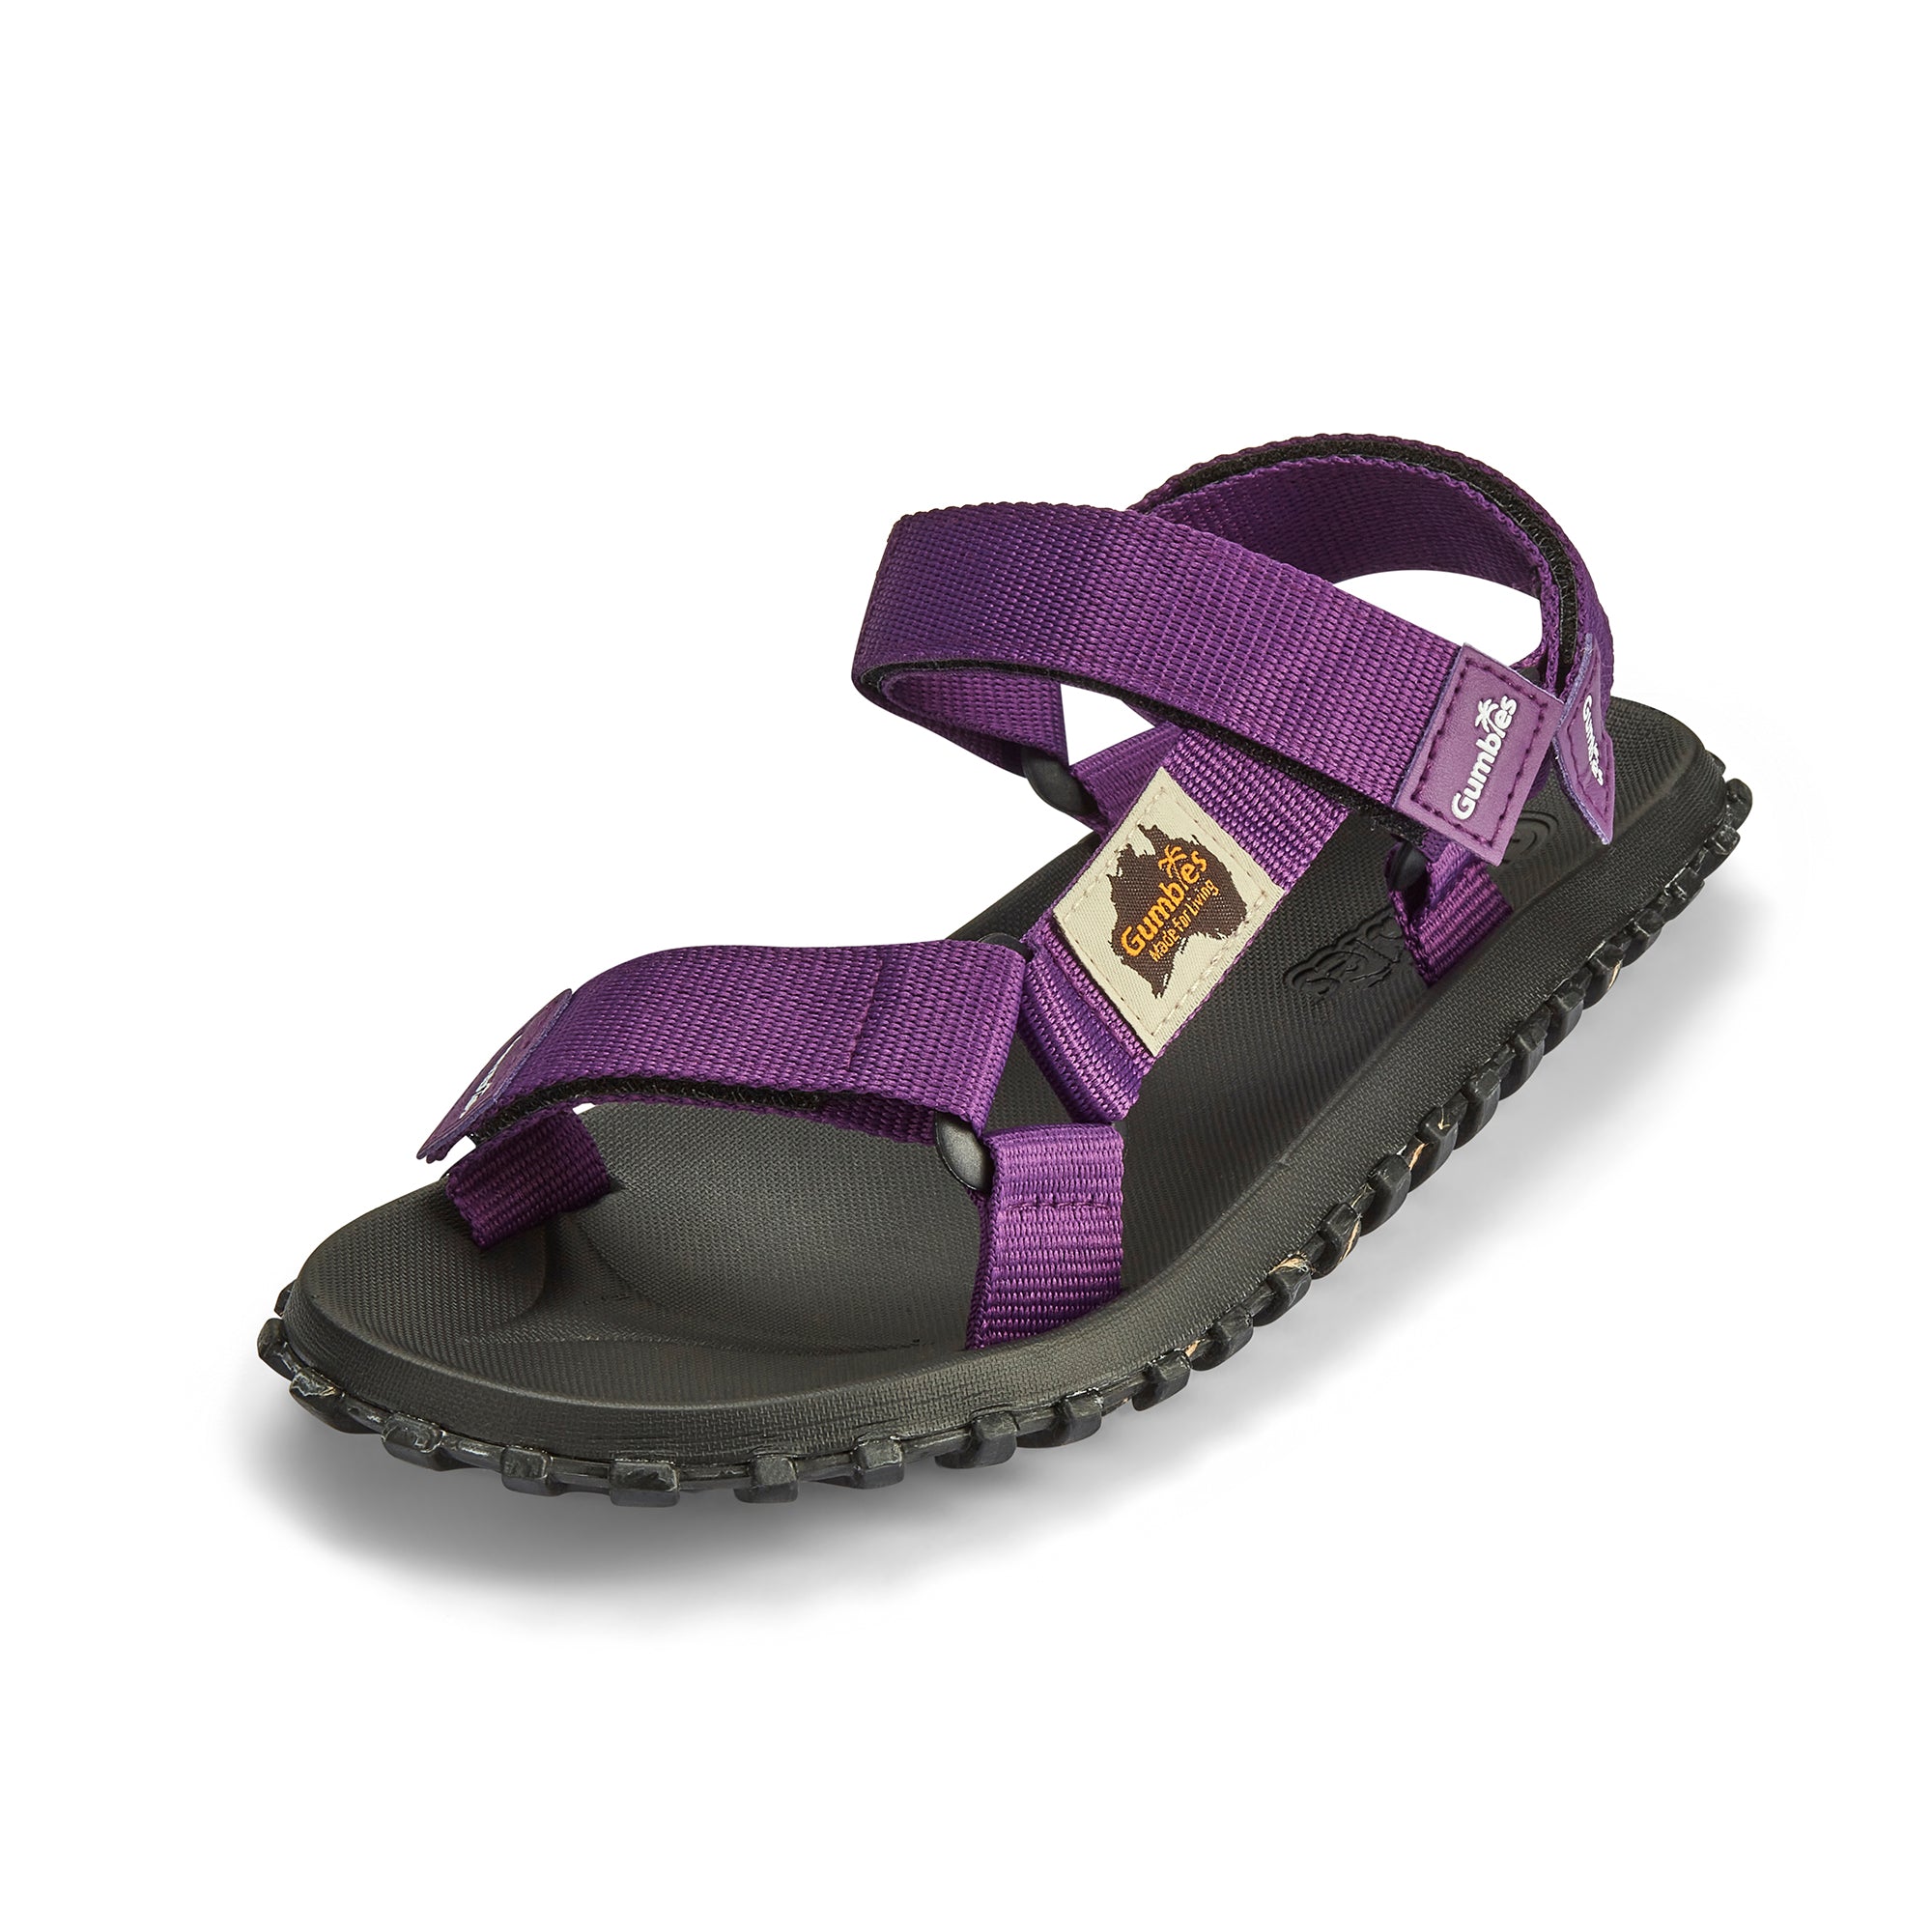 Scrambler Sandals - Women's - Purple